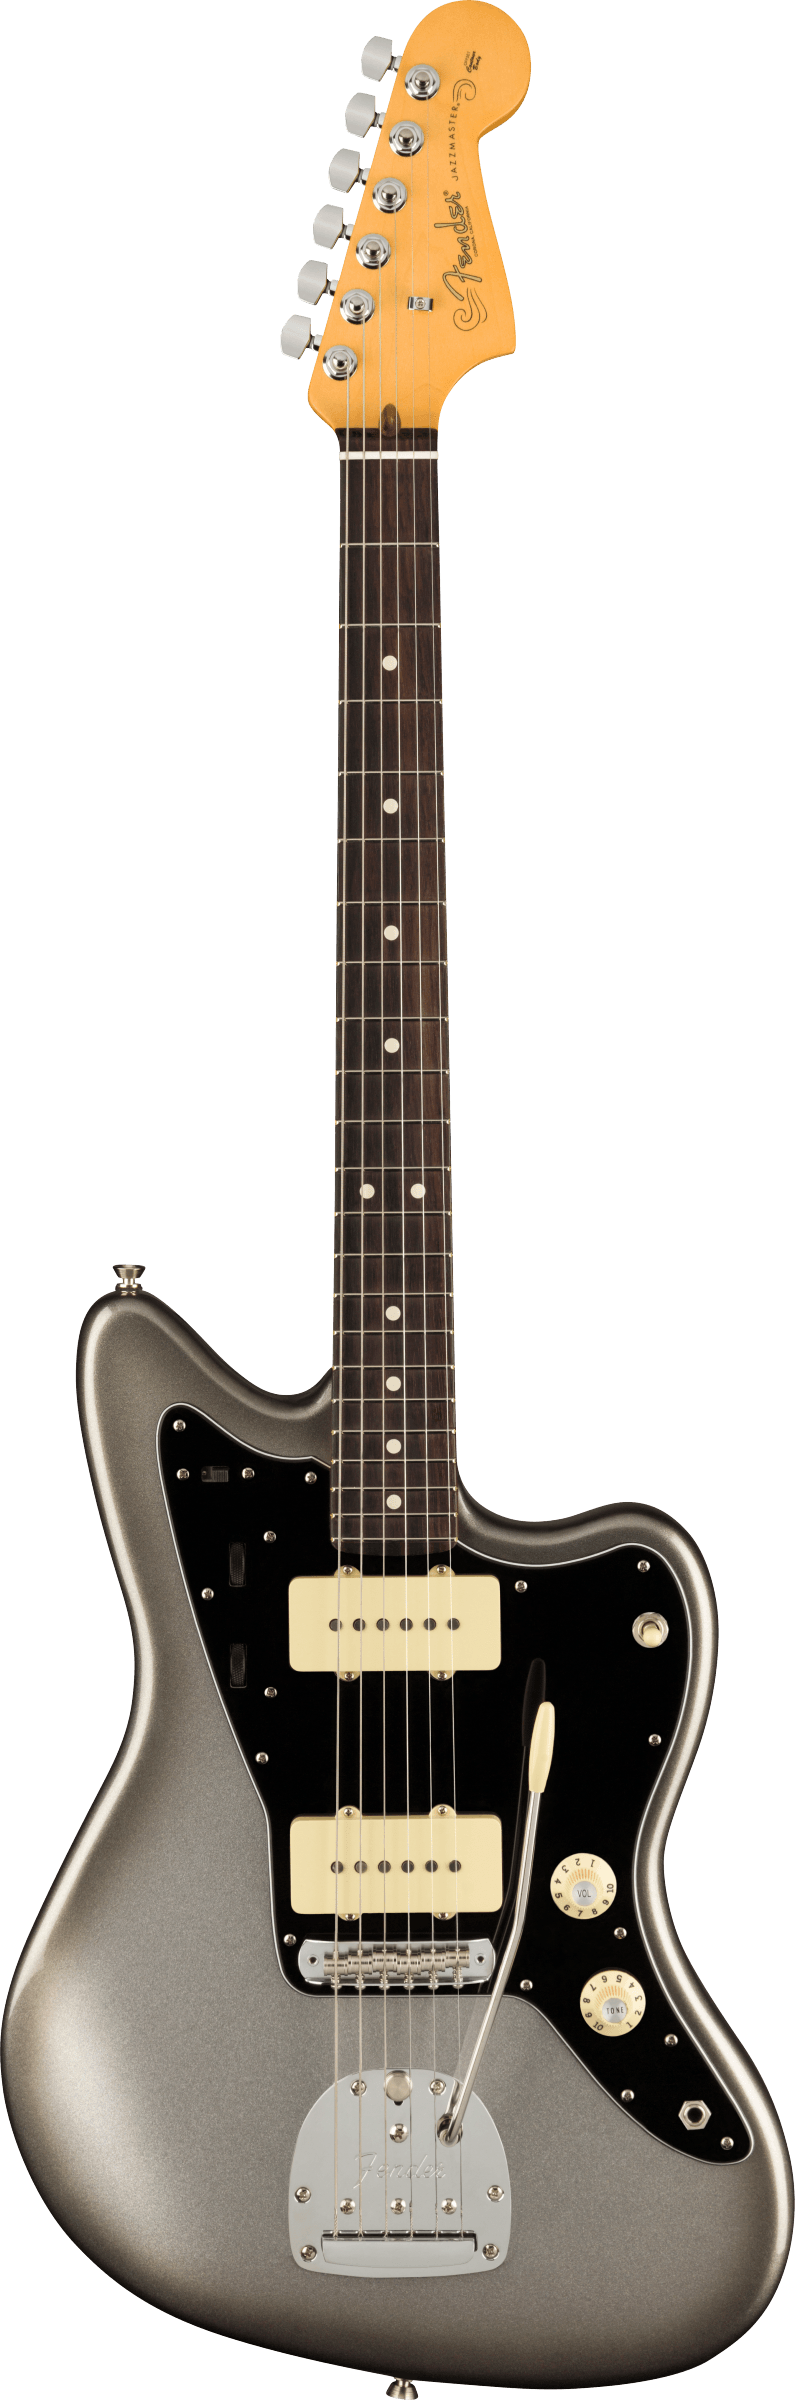 Fender Jazzmaster RW electric guitar in Mercury Tone Shop guitars Dallas Texas